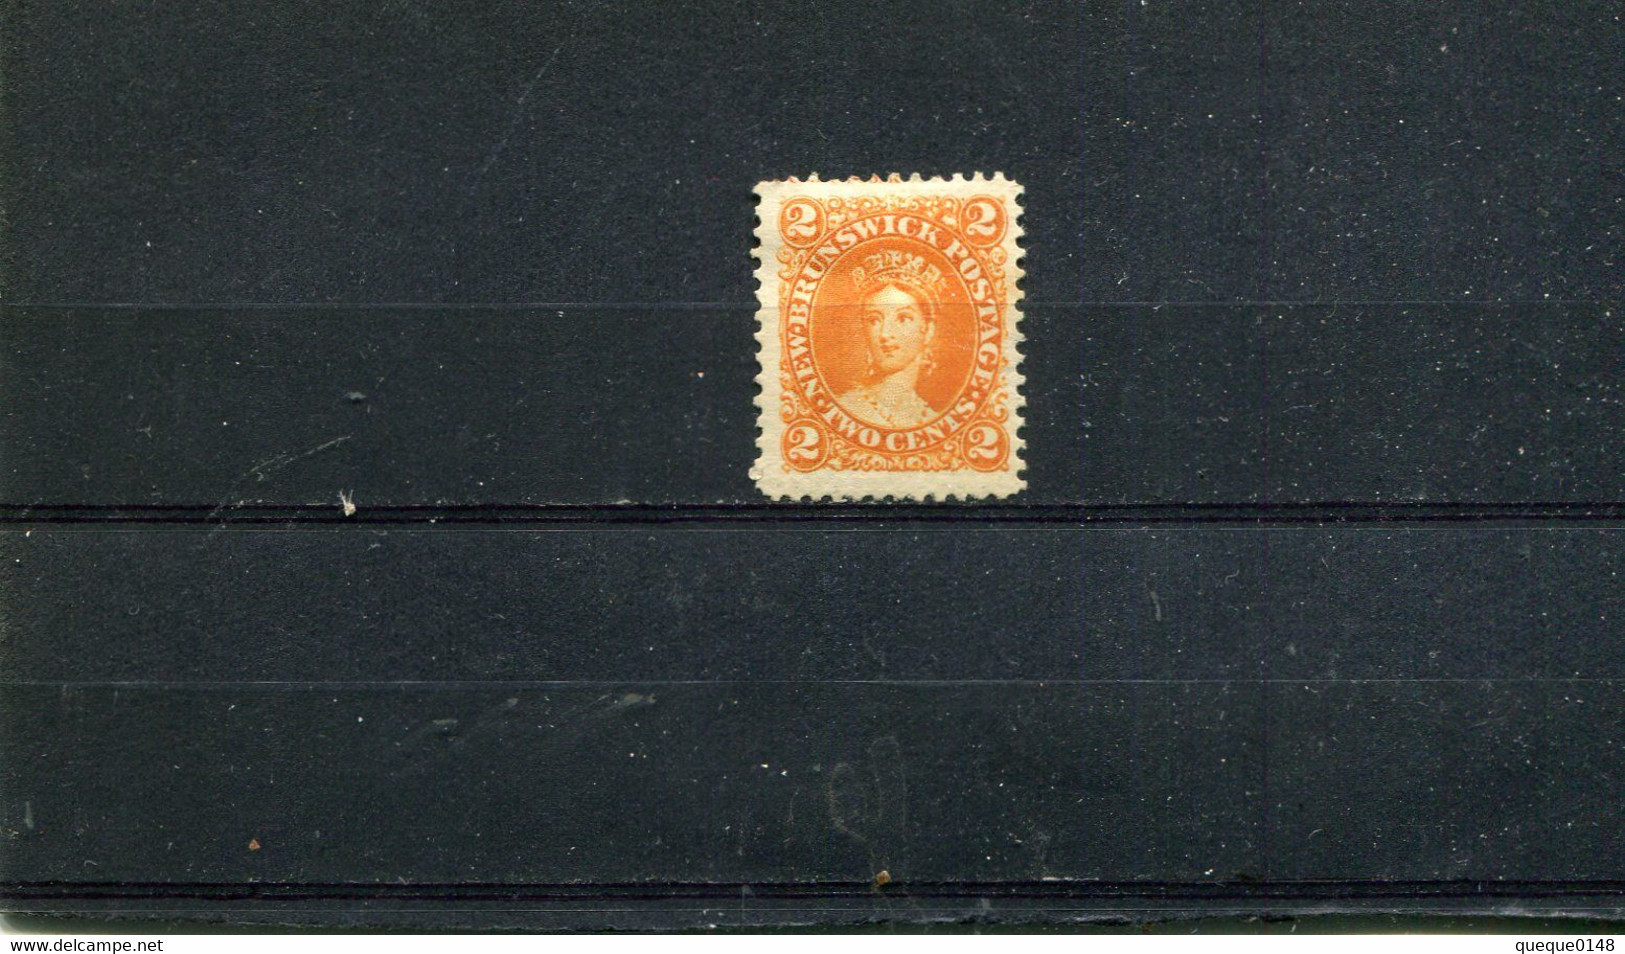 Nouveau-Brunswick 1860-63 Yt 5 * - Unused Stamps